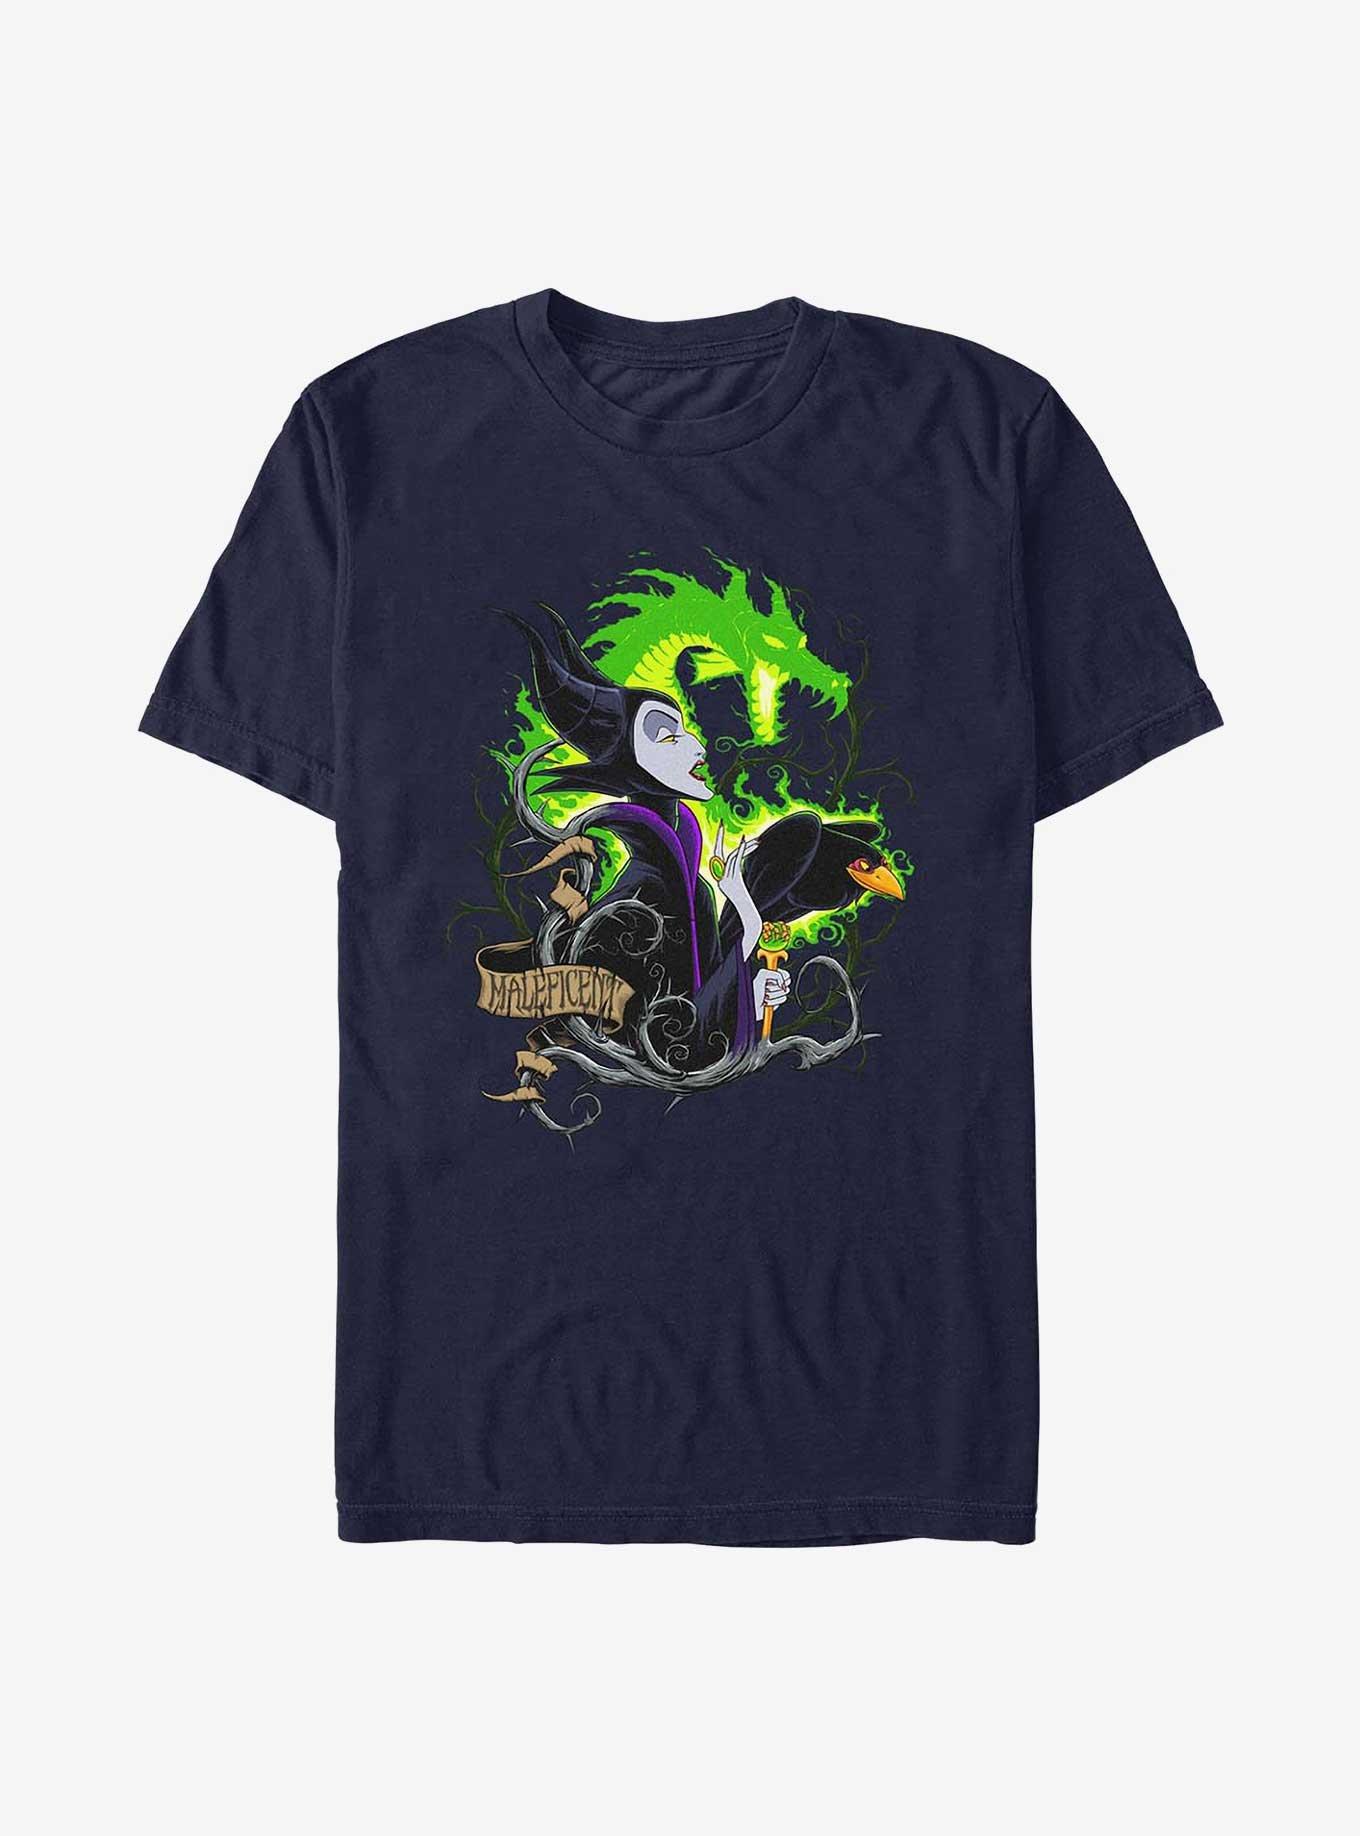 Disney Sleeping Beauty Maleficent Mistress Of Evil T-Shirt